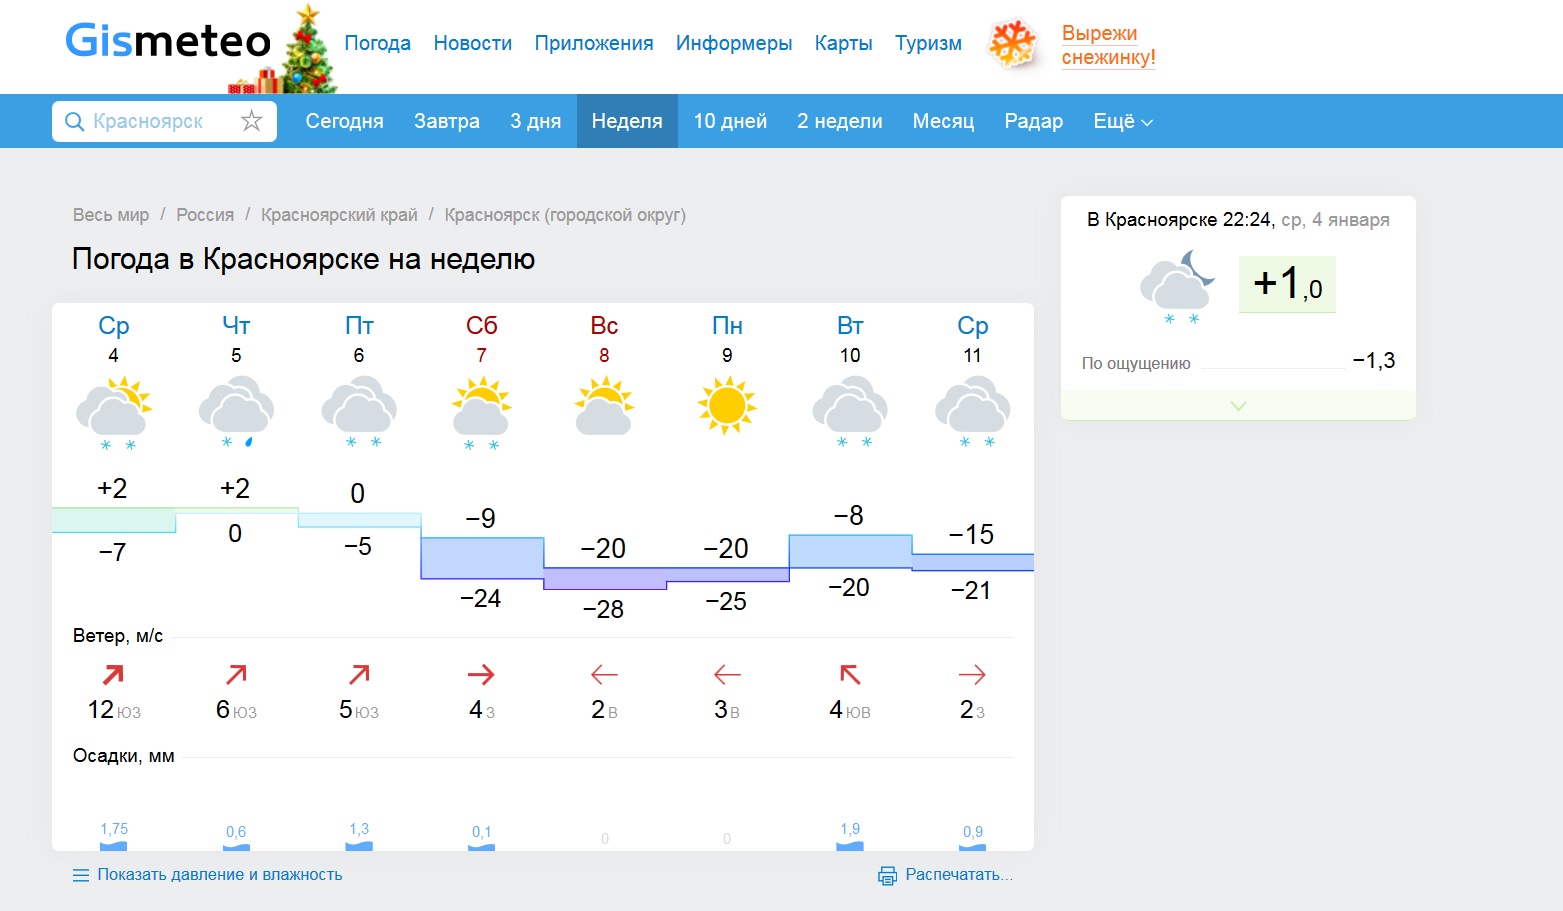 В городе красноярске на неделю. Погода в Красноярске на неделю. GISMETEO Красноярск. Погода в Красноярске на завтра. Погода в Красноярске сегодня и завтра.